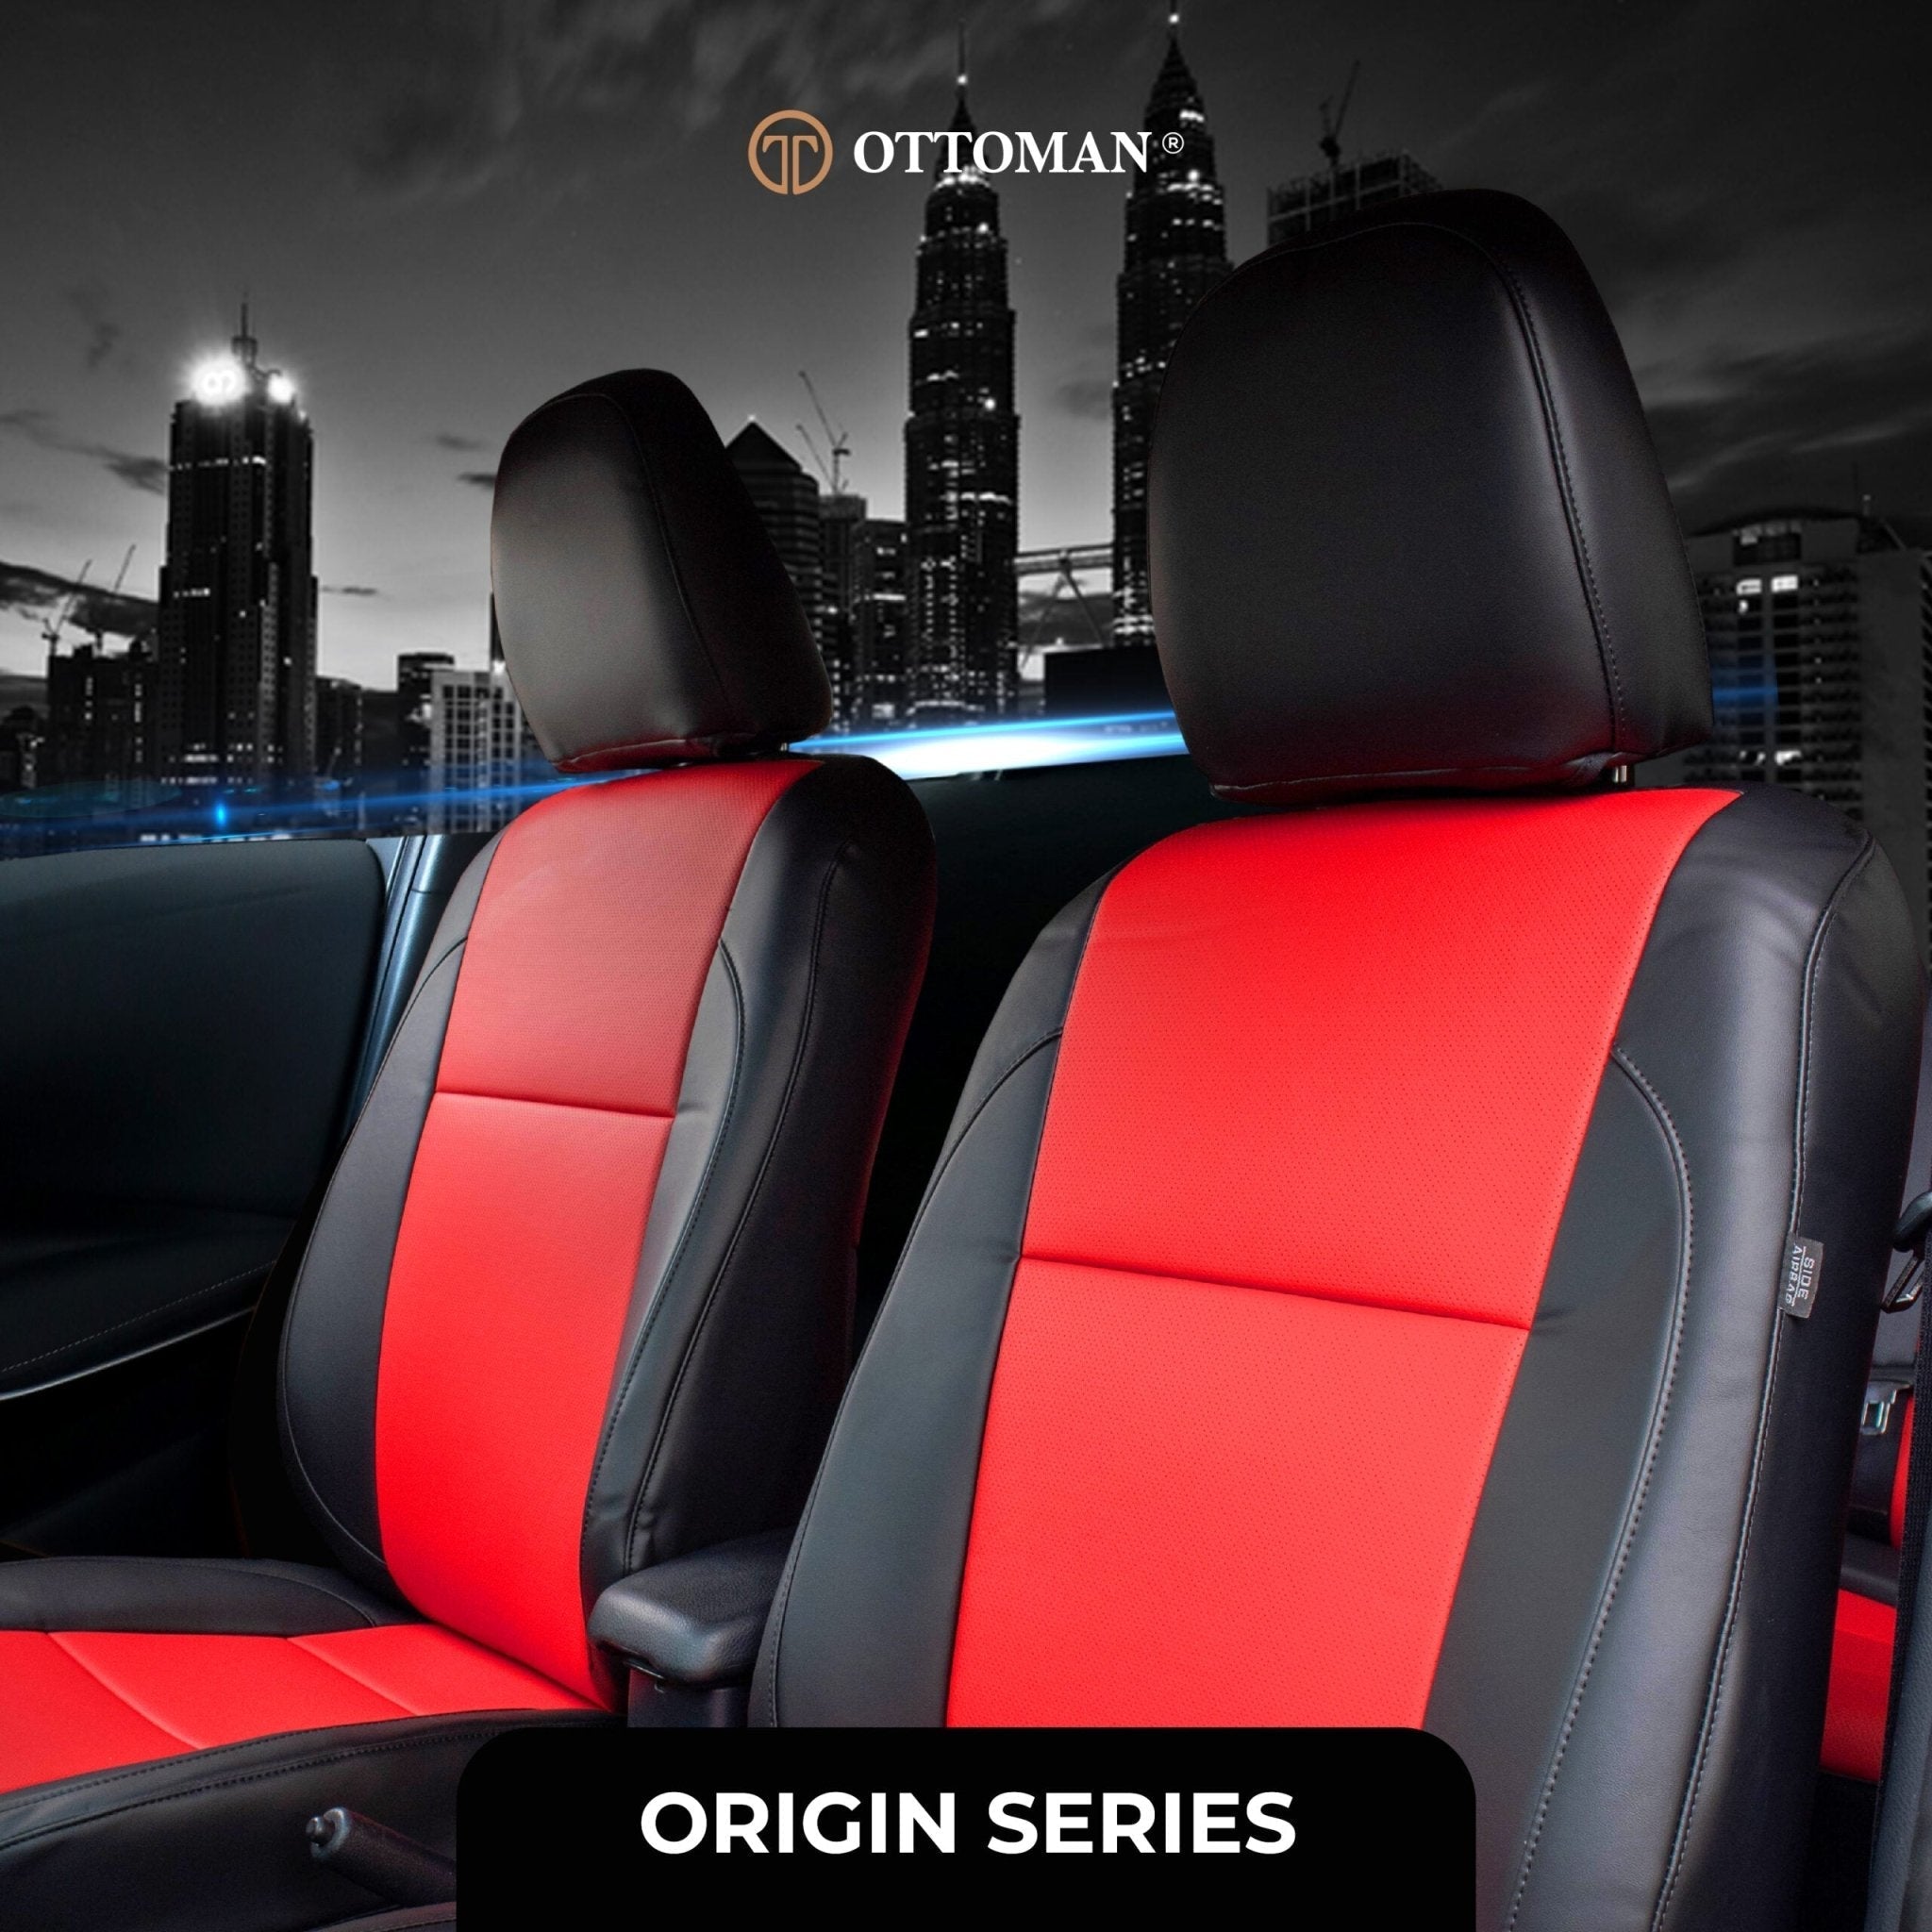 Nissan Urvan NV350 (2014-Present) Ottoman Seat Cover Seat Cover in Klang Selangor, Penang, Johor Bahru - Ottoman Car Mats